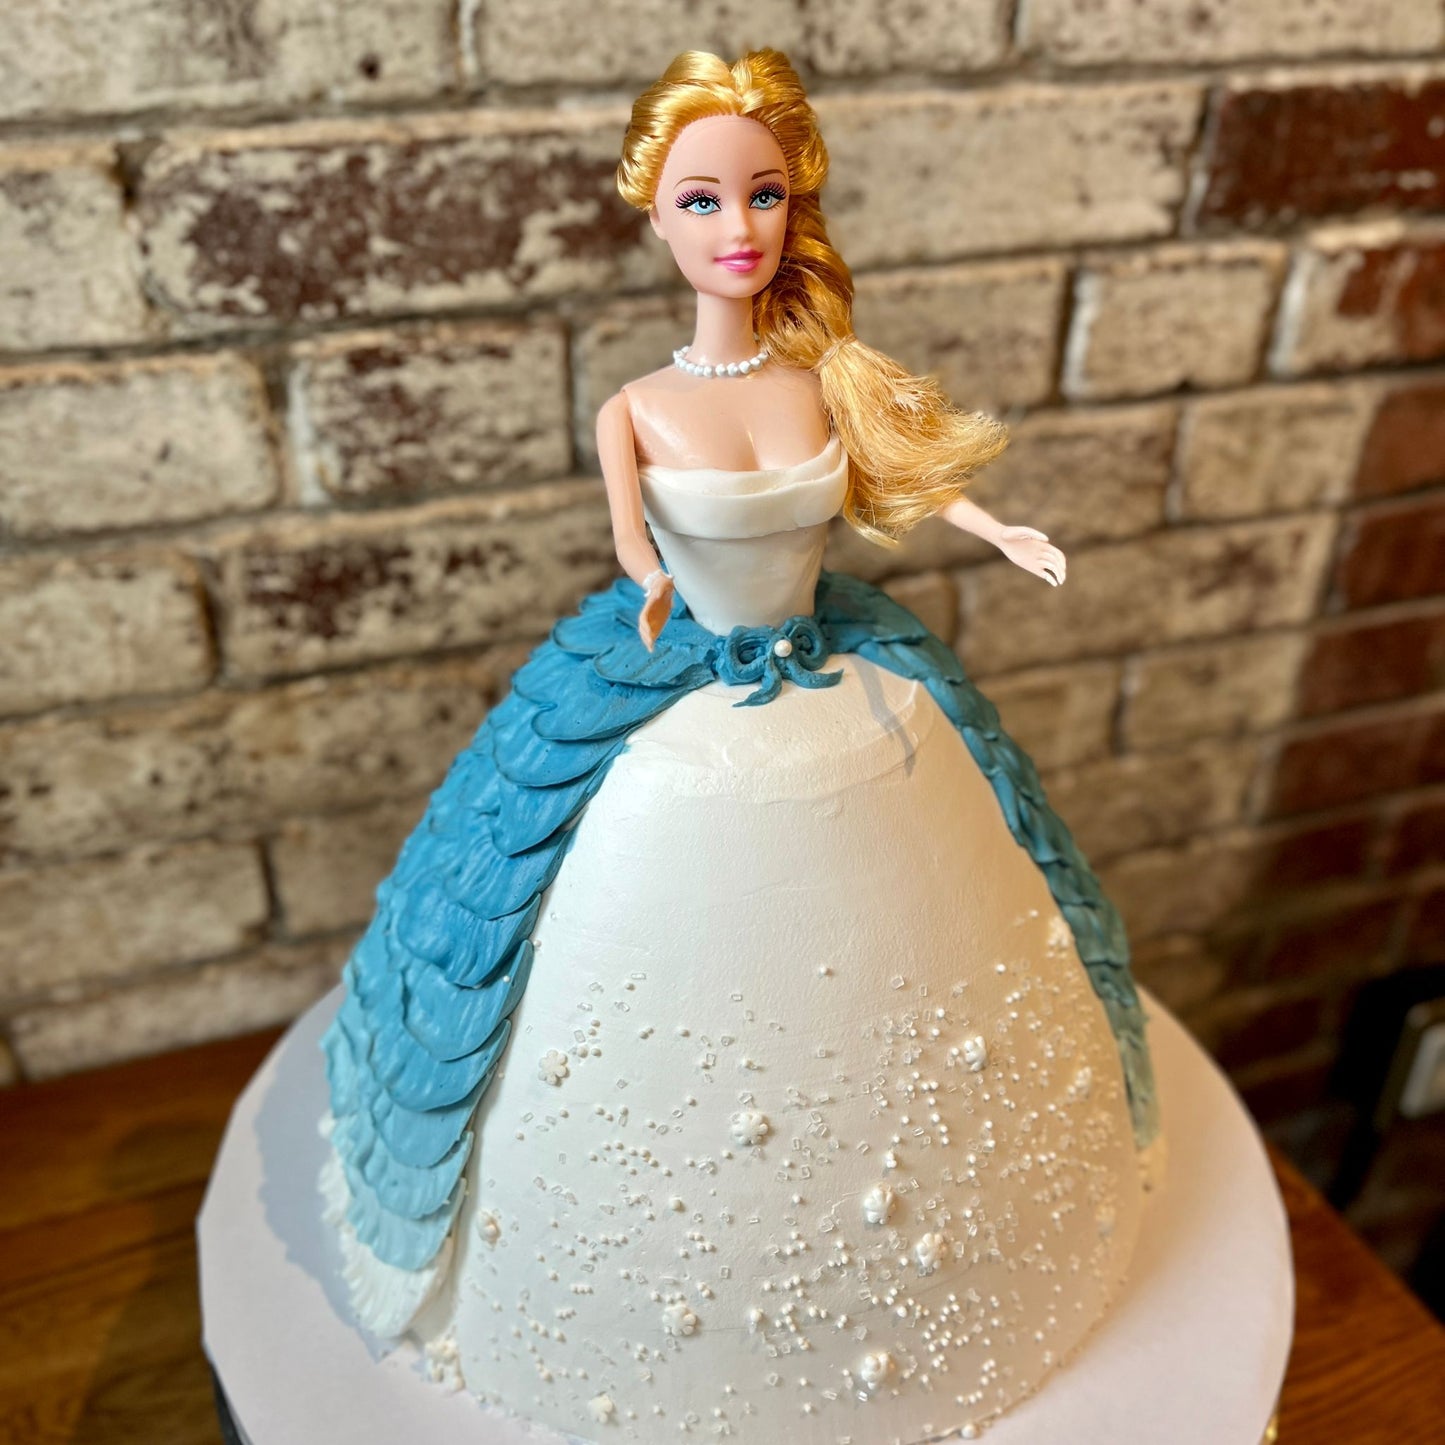 Barbie in a blue dress birthday cake